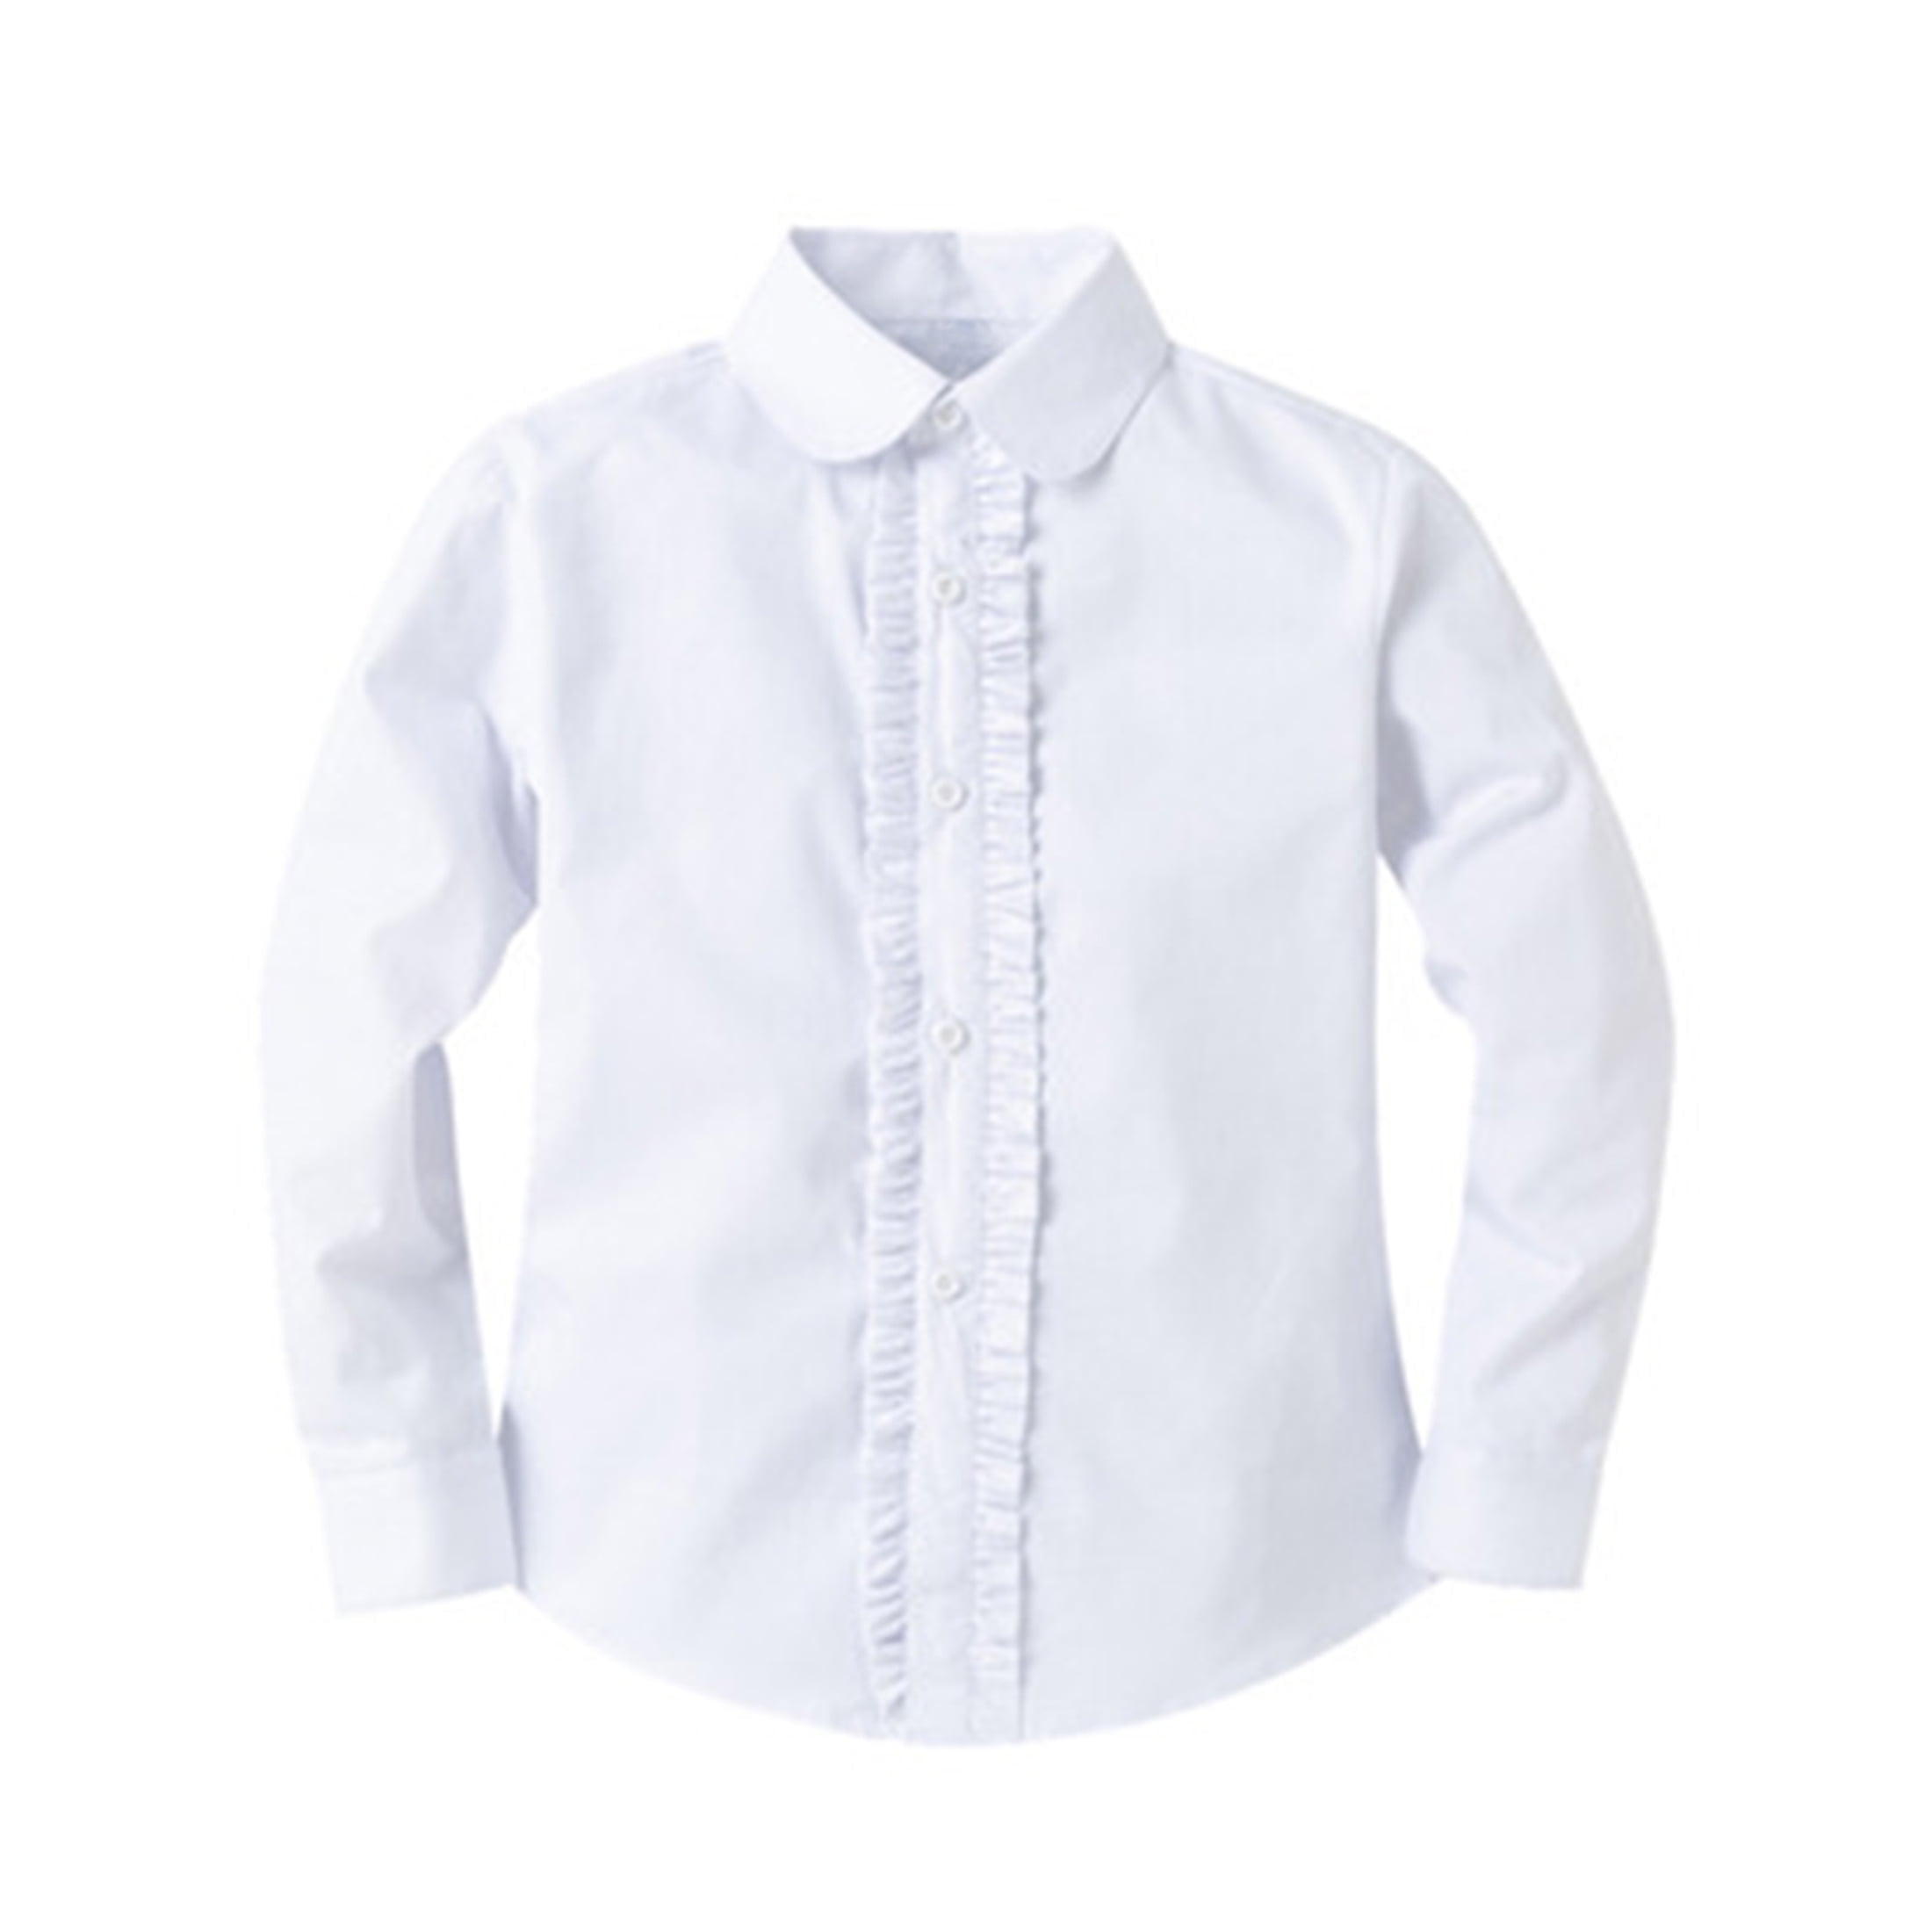 Bienzoe Girl's School Uniform Long Sleeve White Blouse M - Walmart.com